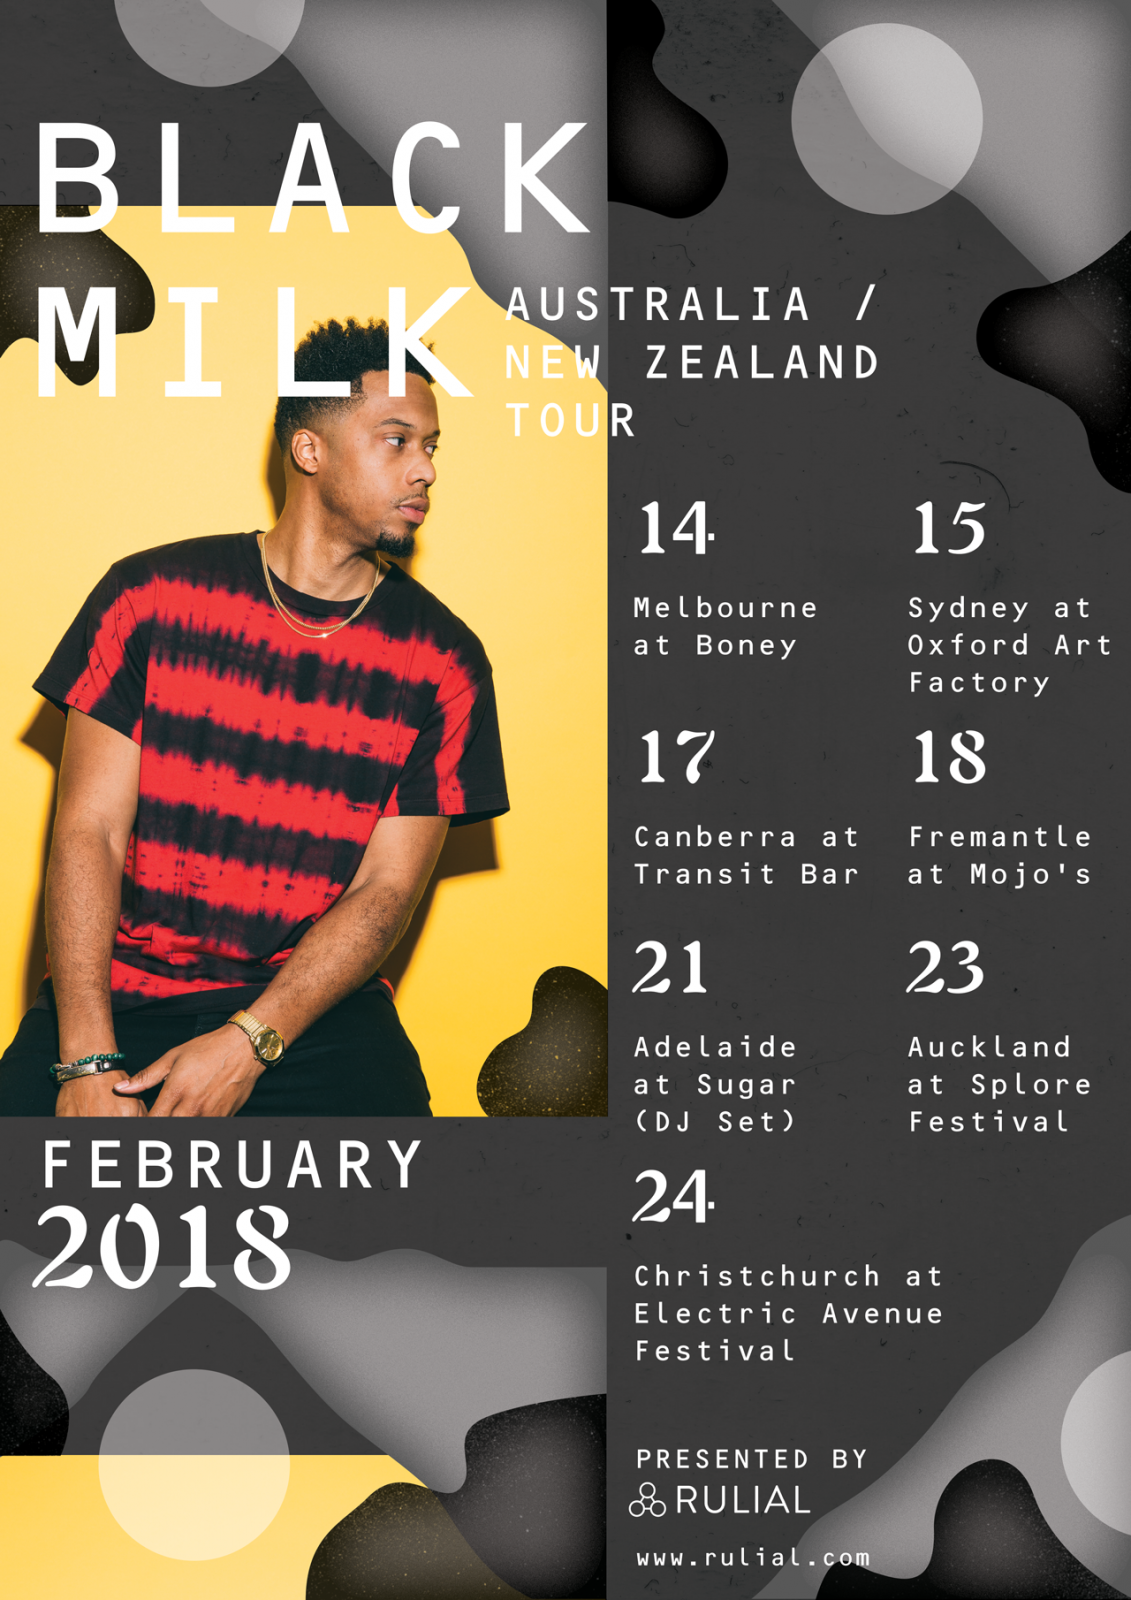 BLACK MILK AUSTRALIA & NEW ZEALAND TOUR